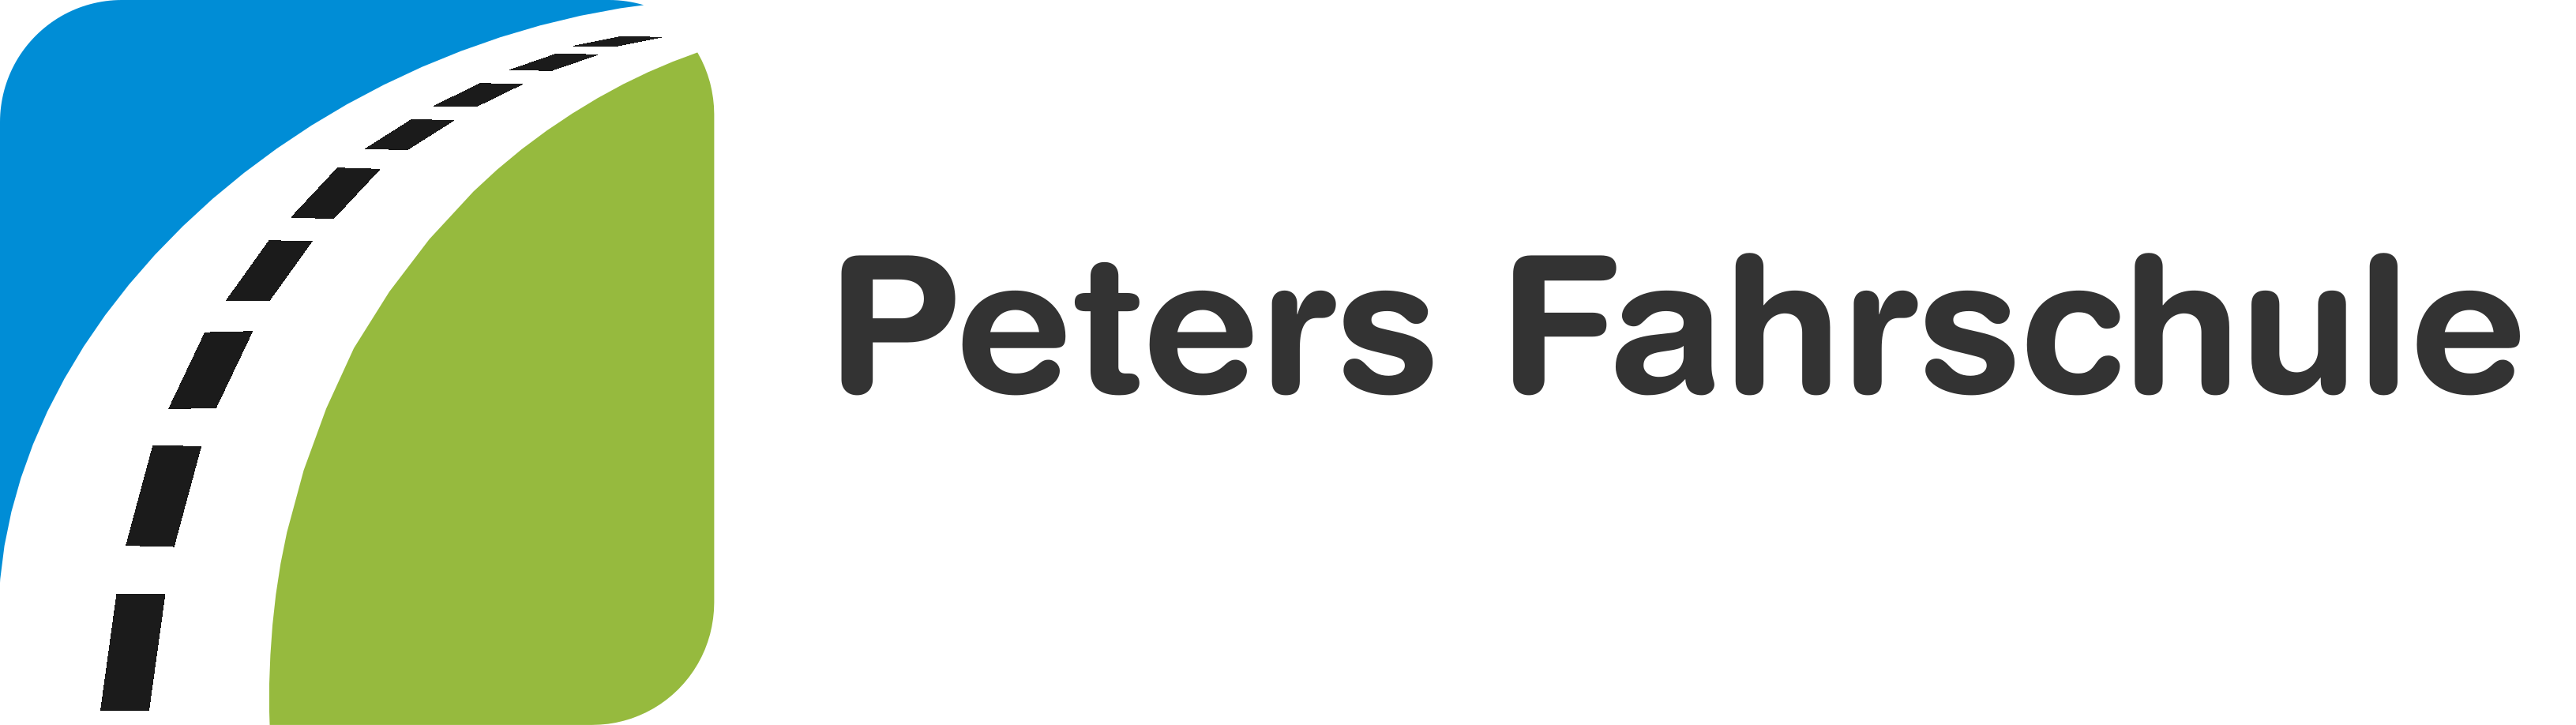 Peters Fahrschule freut sich über personelle Verstärkung